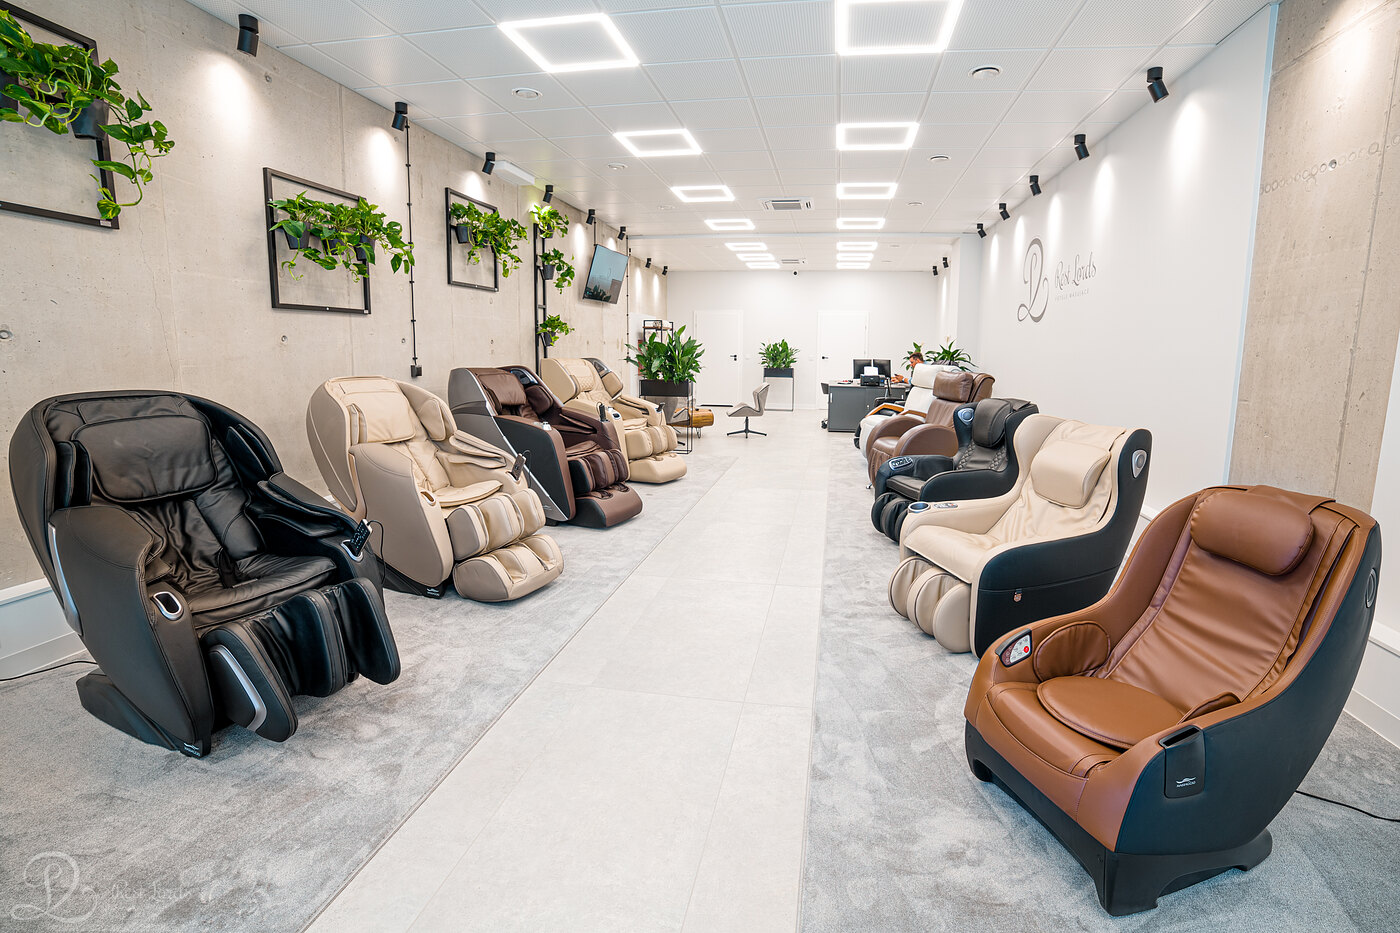 Showroom of massage chairs